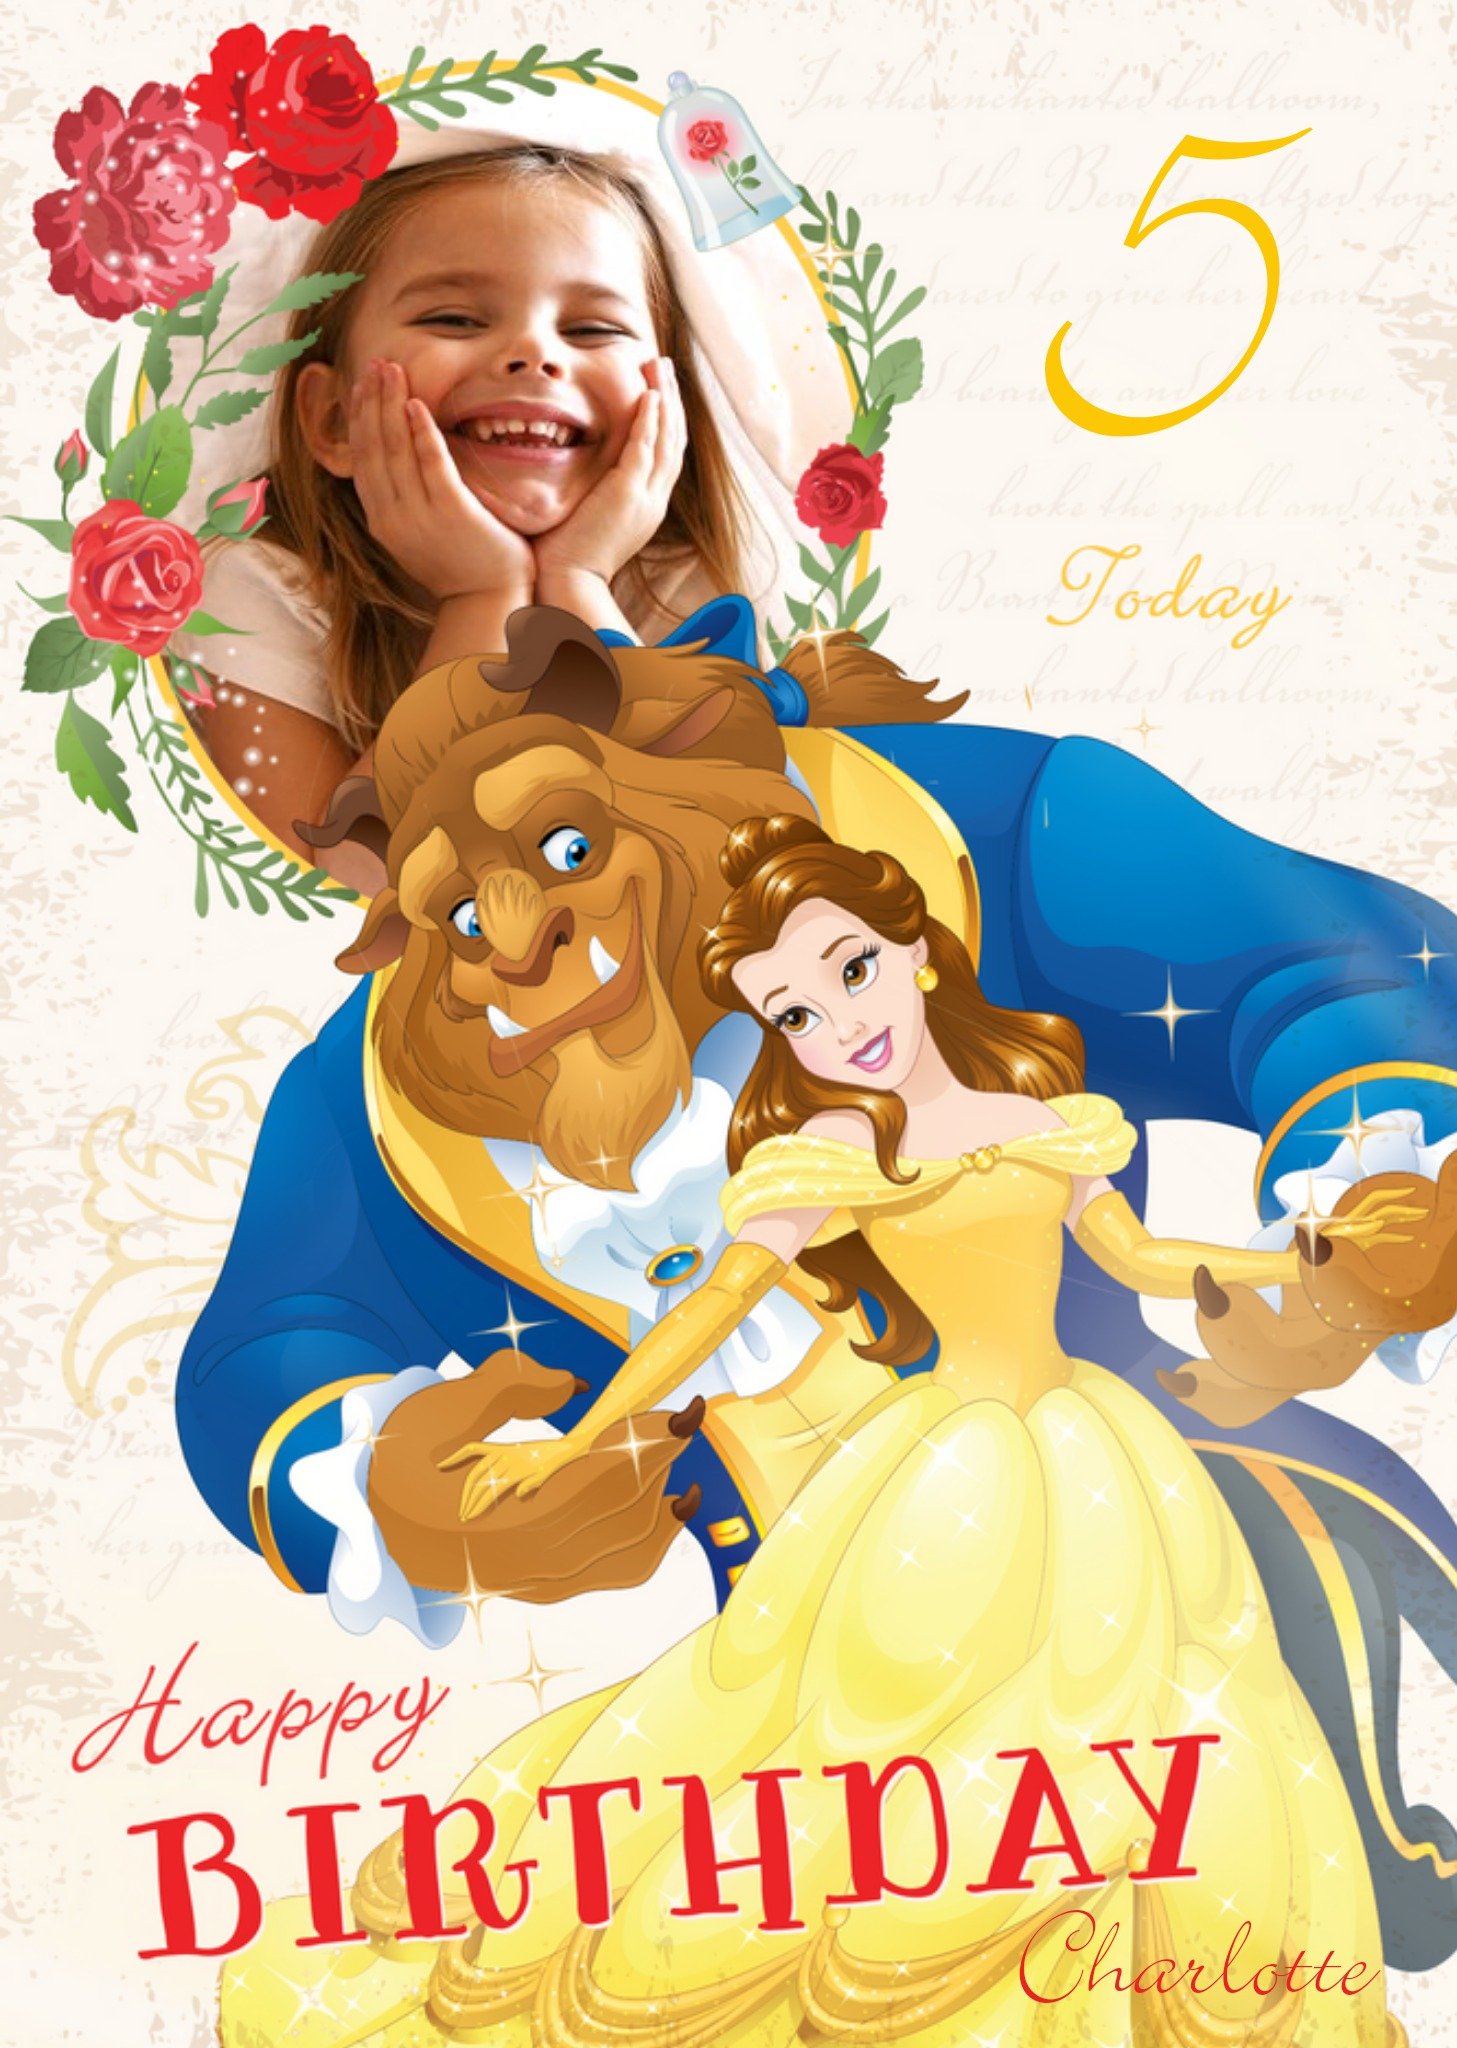 Disney Princesses Disney Beauty And the Beast Happy 5th Birthday Photo Card Ecard